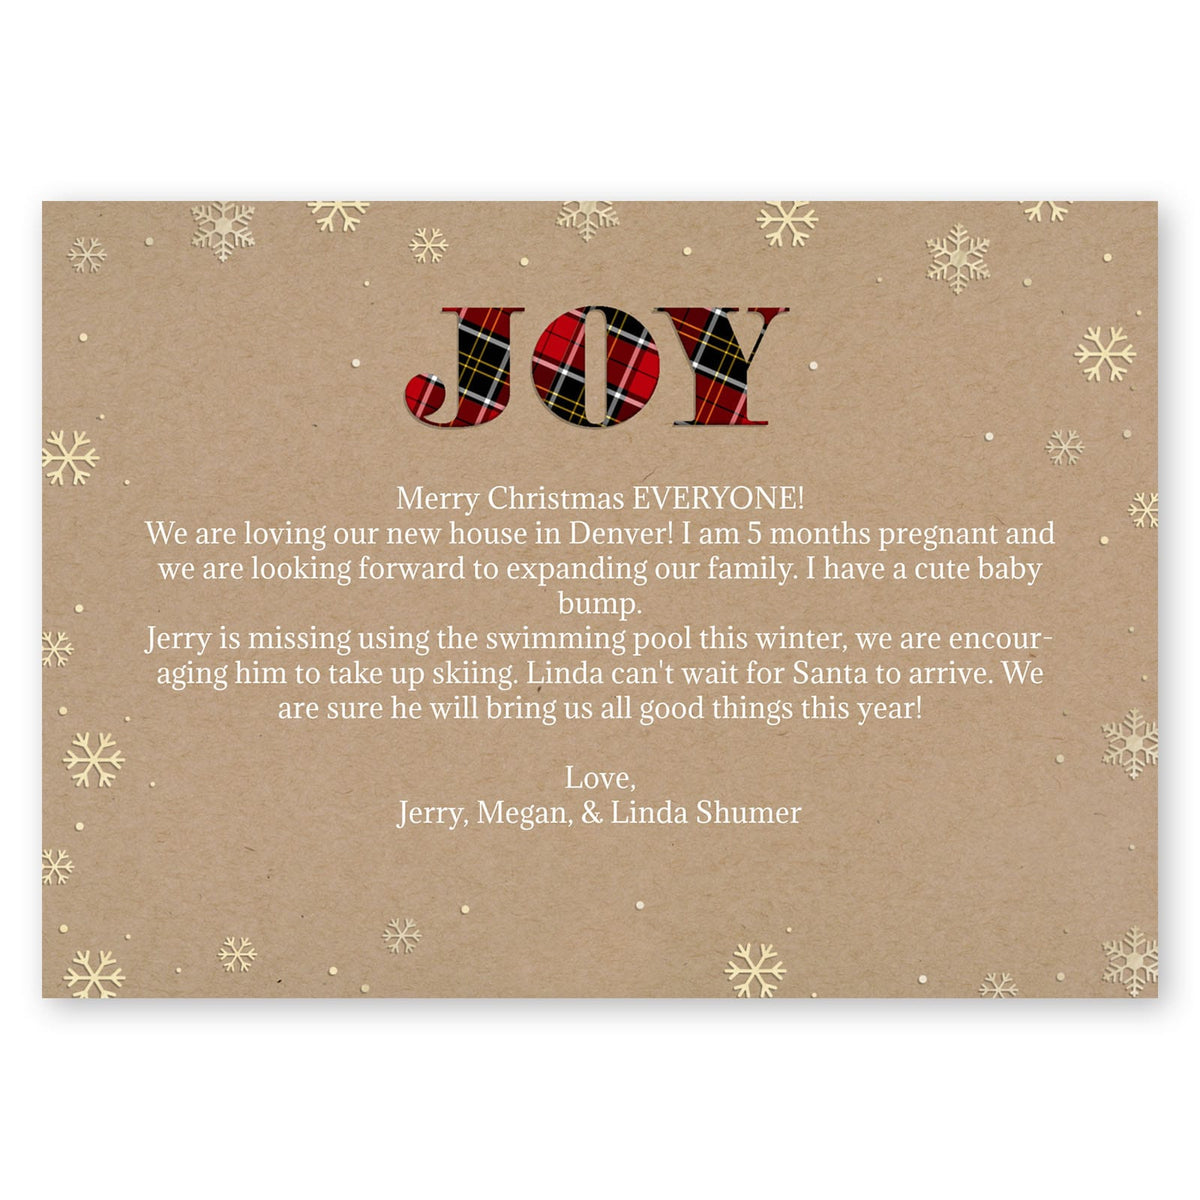 Tartan Mixed Plaid Holiday Card Gartner Studios Christmas Card